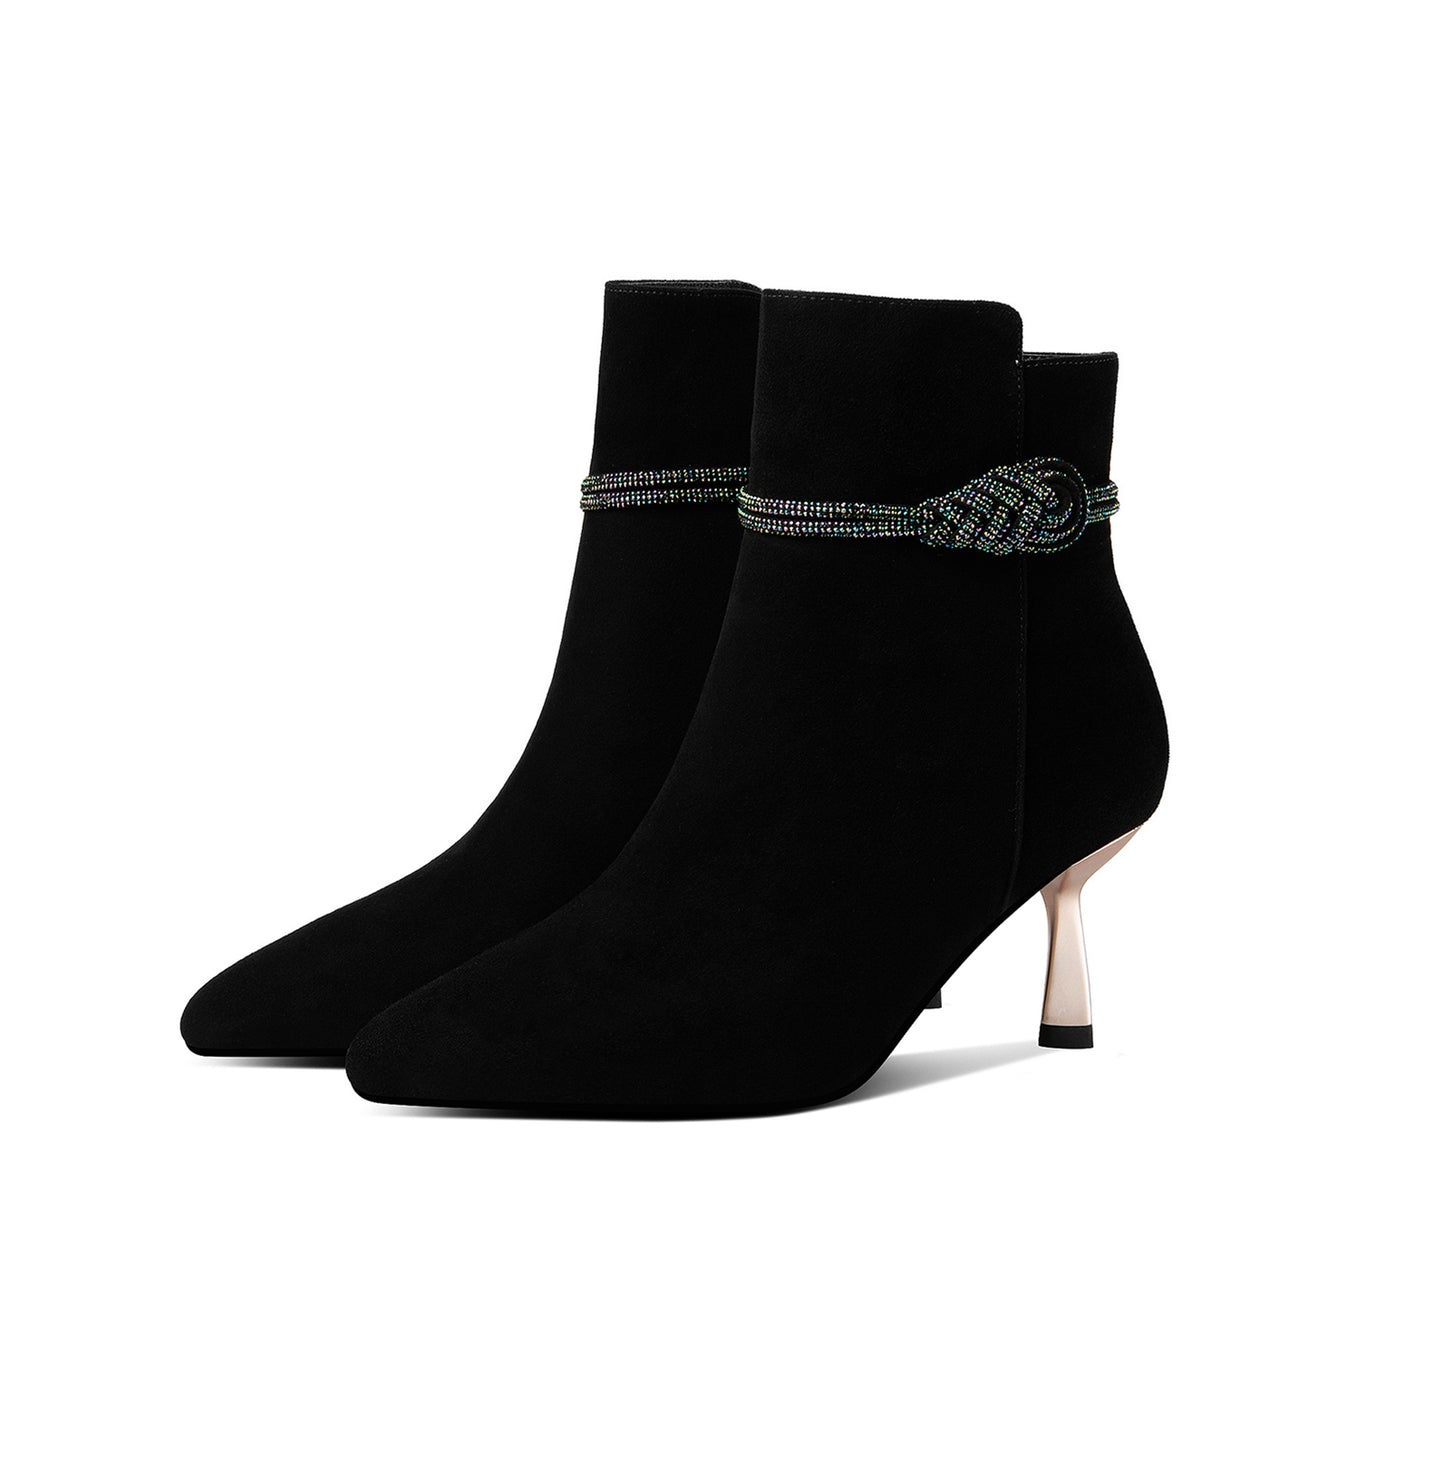 TinaCus Handmade Women's Suede Leather Stiletto Metal Heel Side Zip Up Pointed Toe Black Ankle Booties